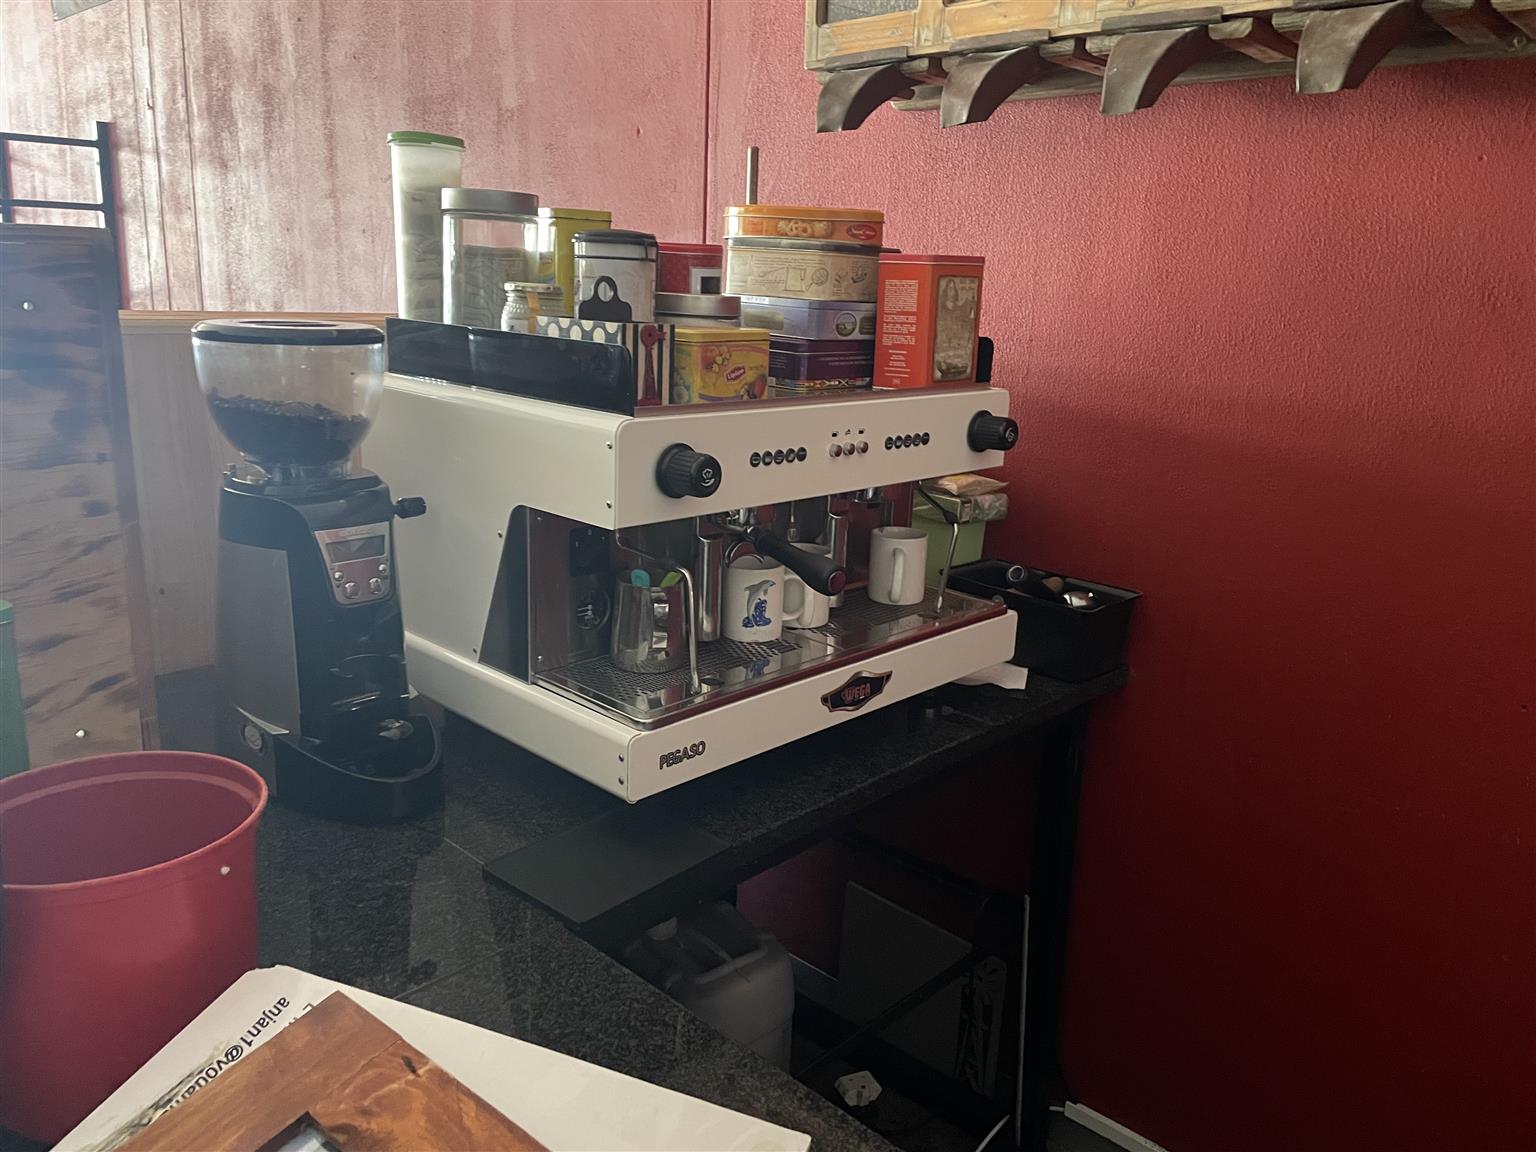  Vega Coffee Machine with Grinder and Barista kit